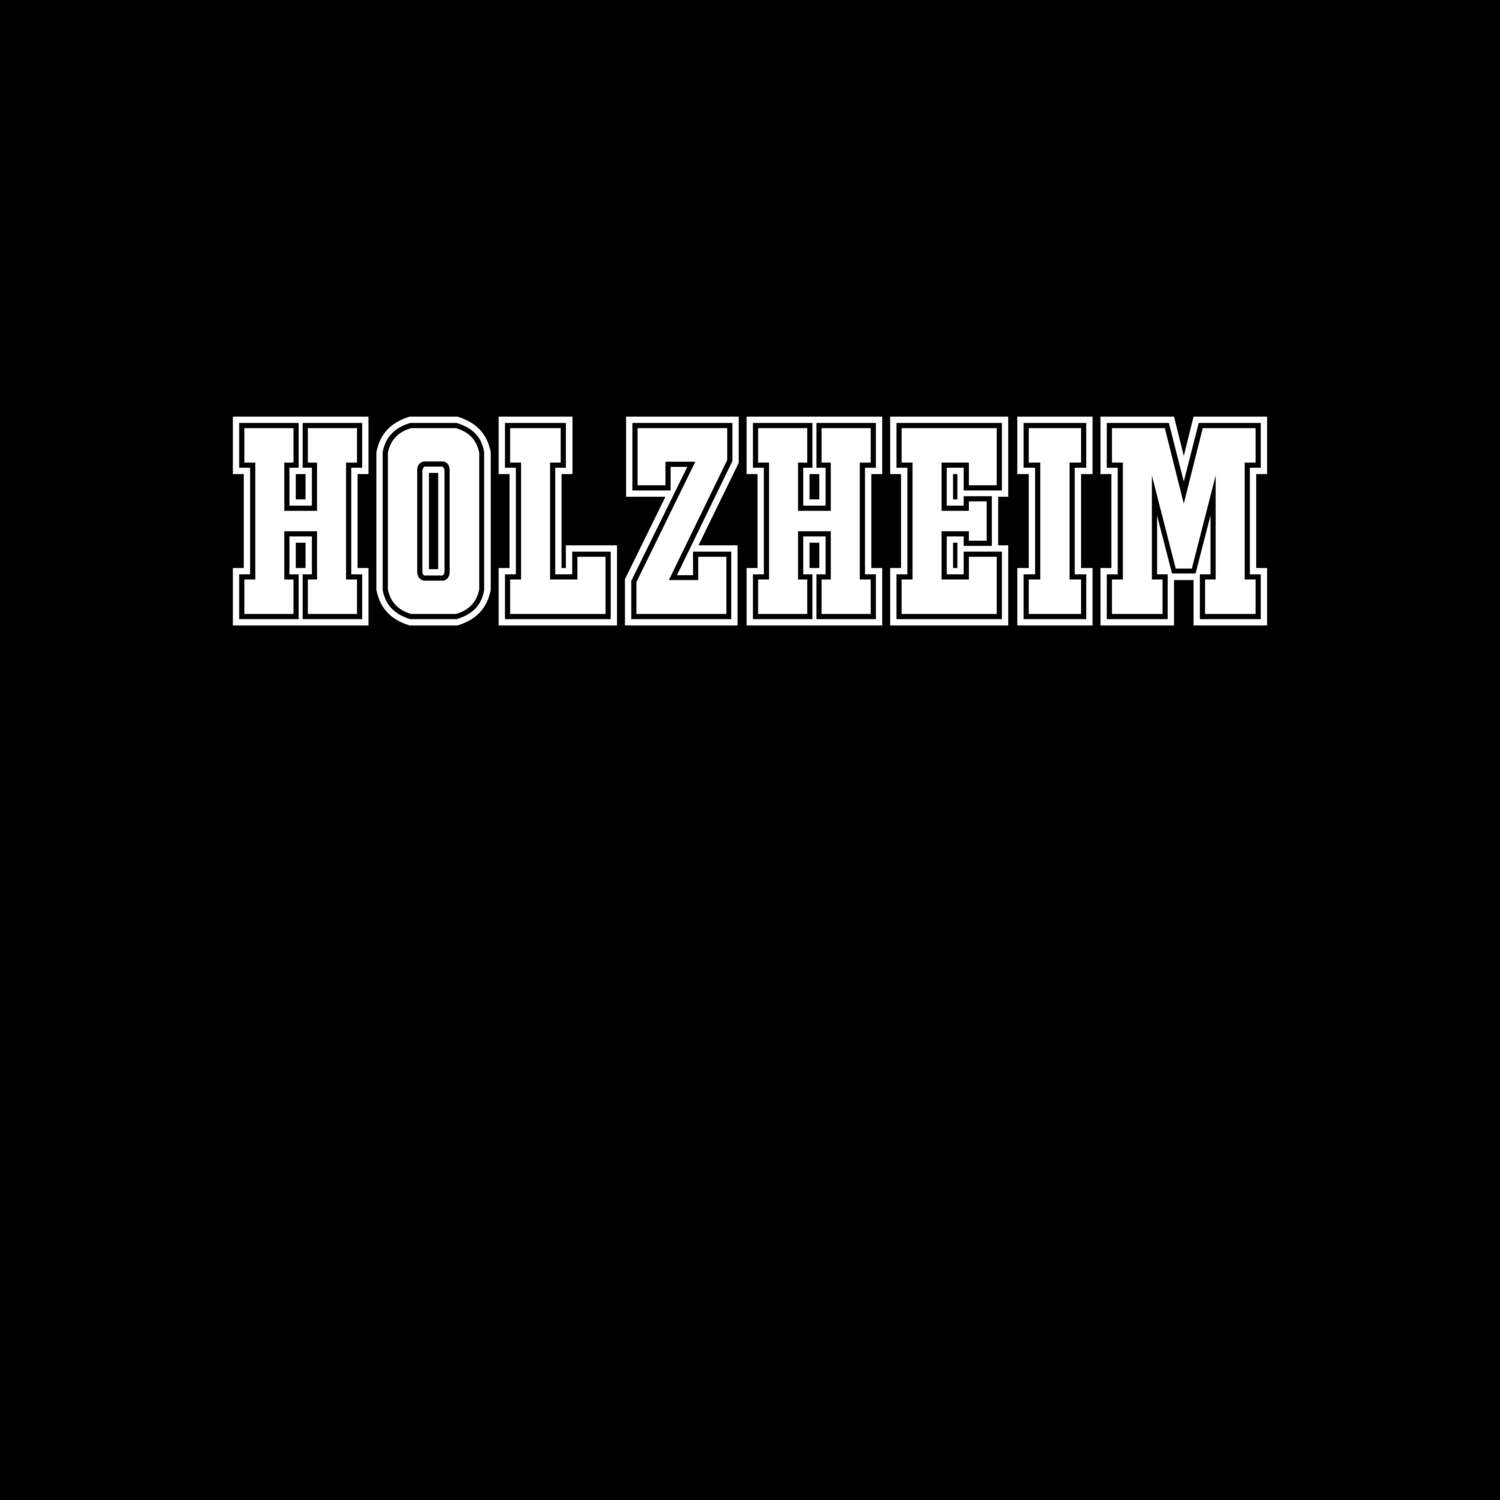 Holzheim T-Shirt »Classic«